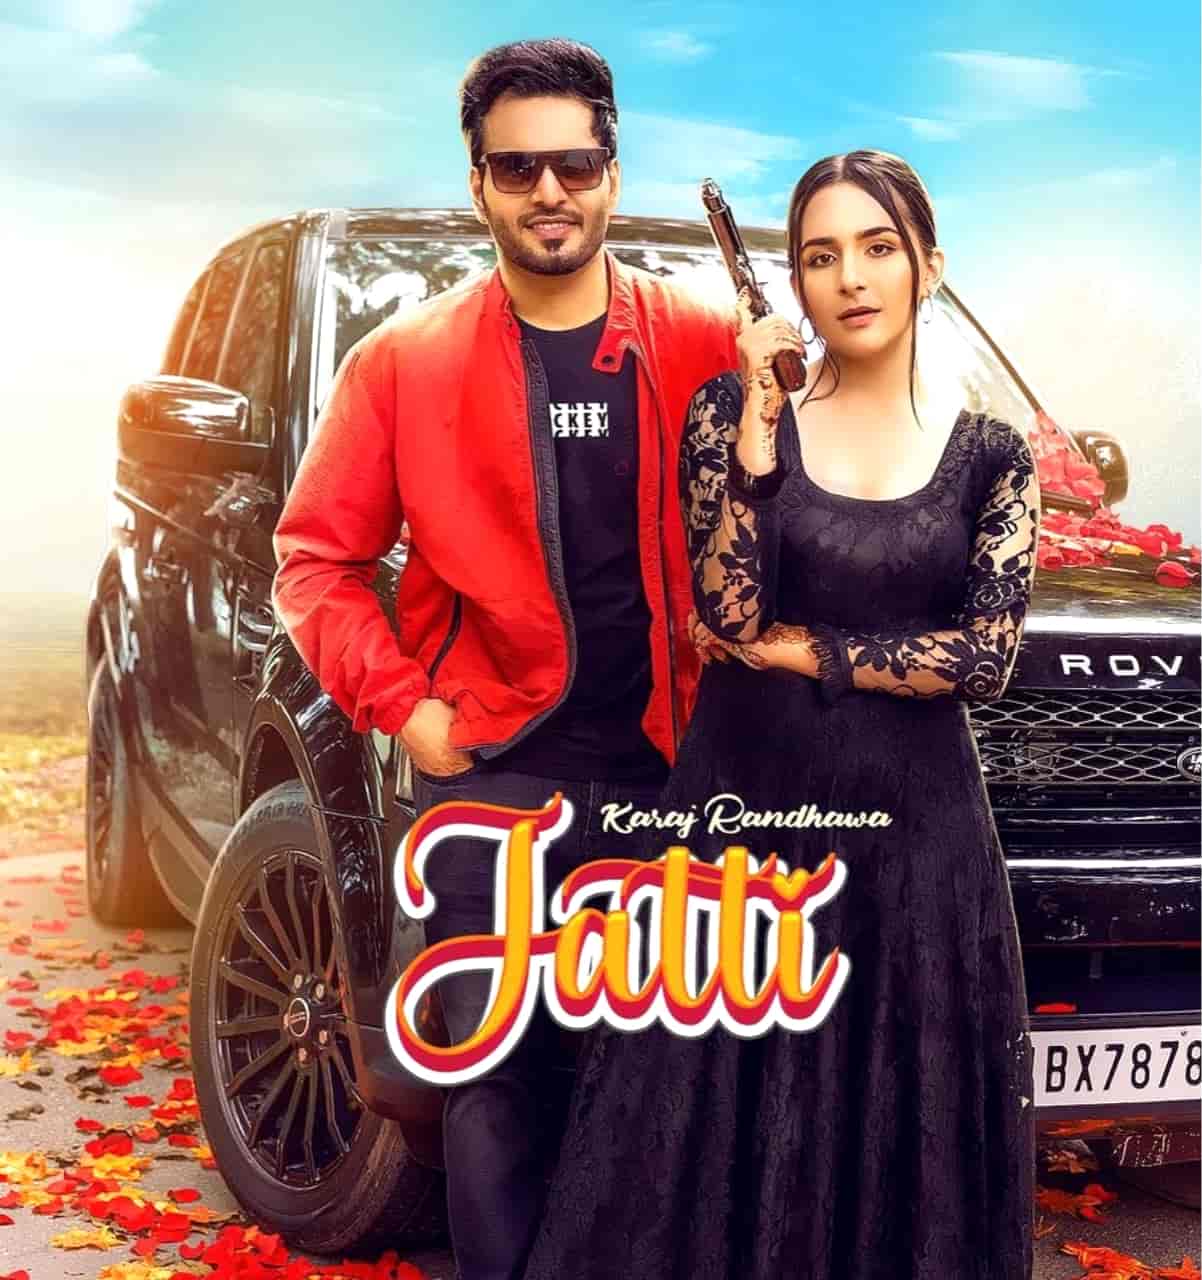 Jatti Punjabi Song Image Features Karaj Randhawa and Shrusty Maan